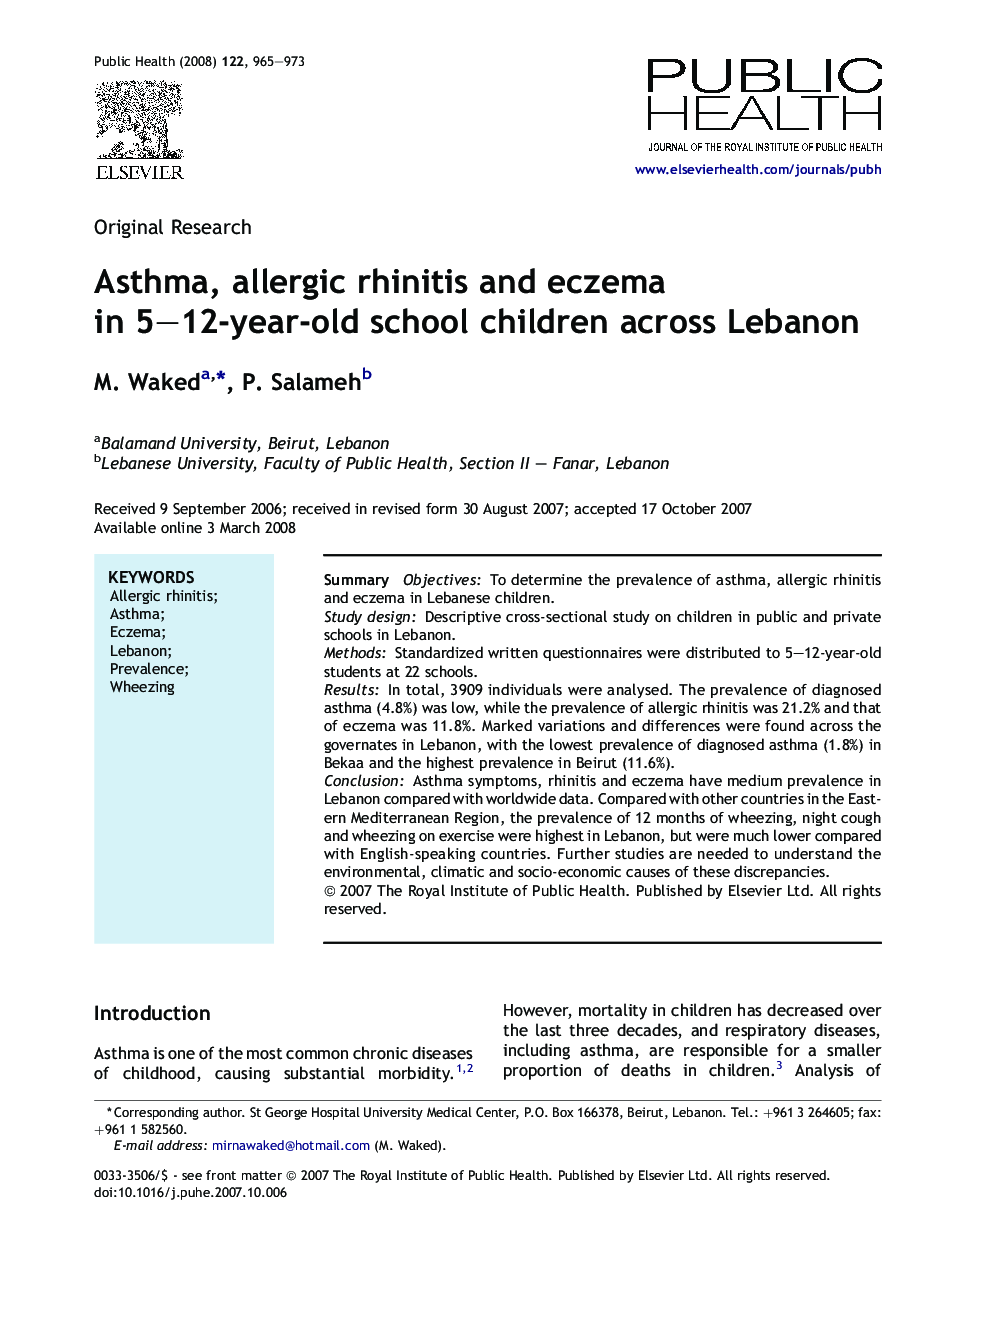 Asthma, allergic rhinitis and eczema in 5-12-year-old school children across Lebanon